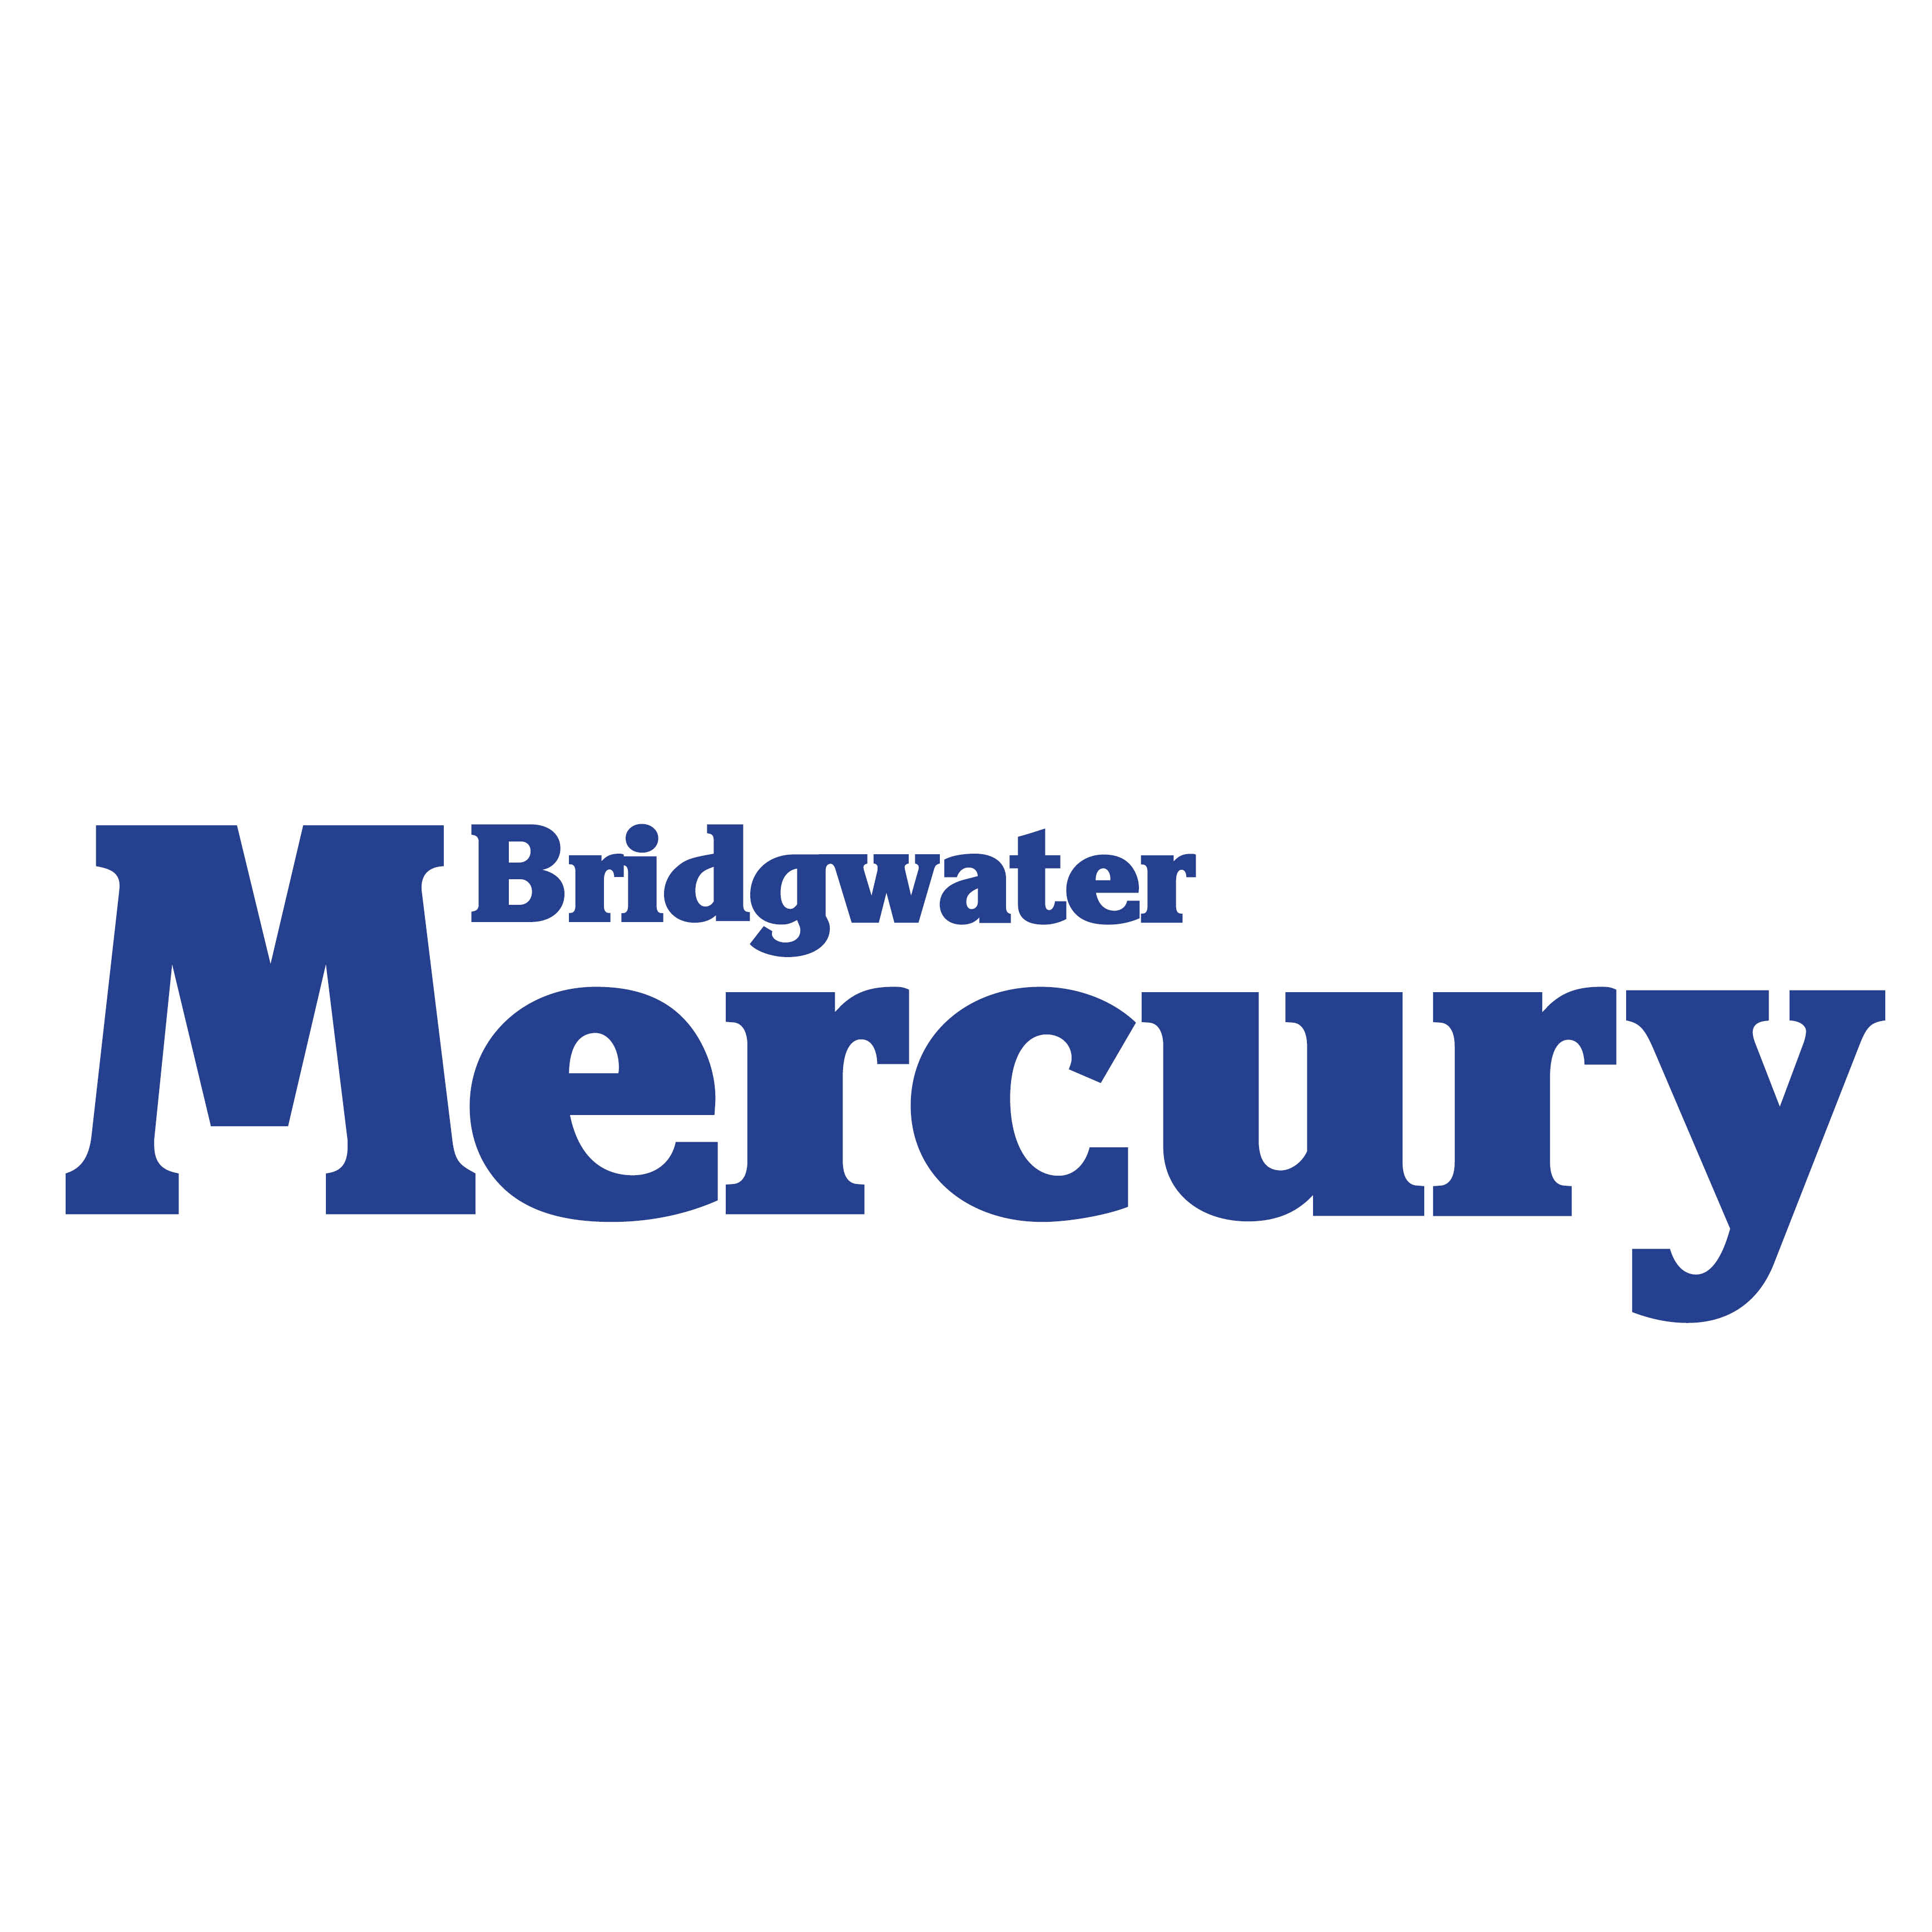 Bridgwater-Mercury-RGB logo